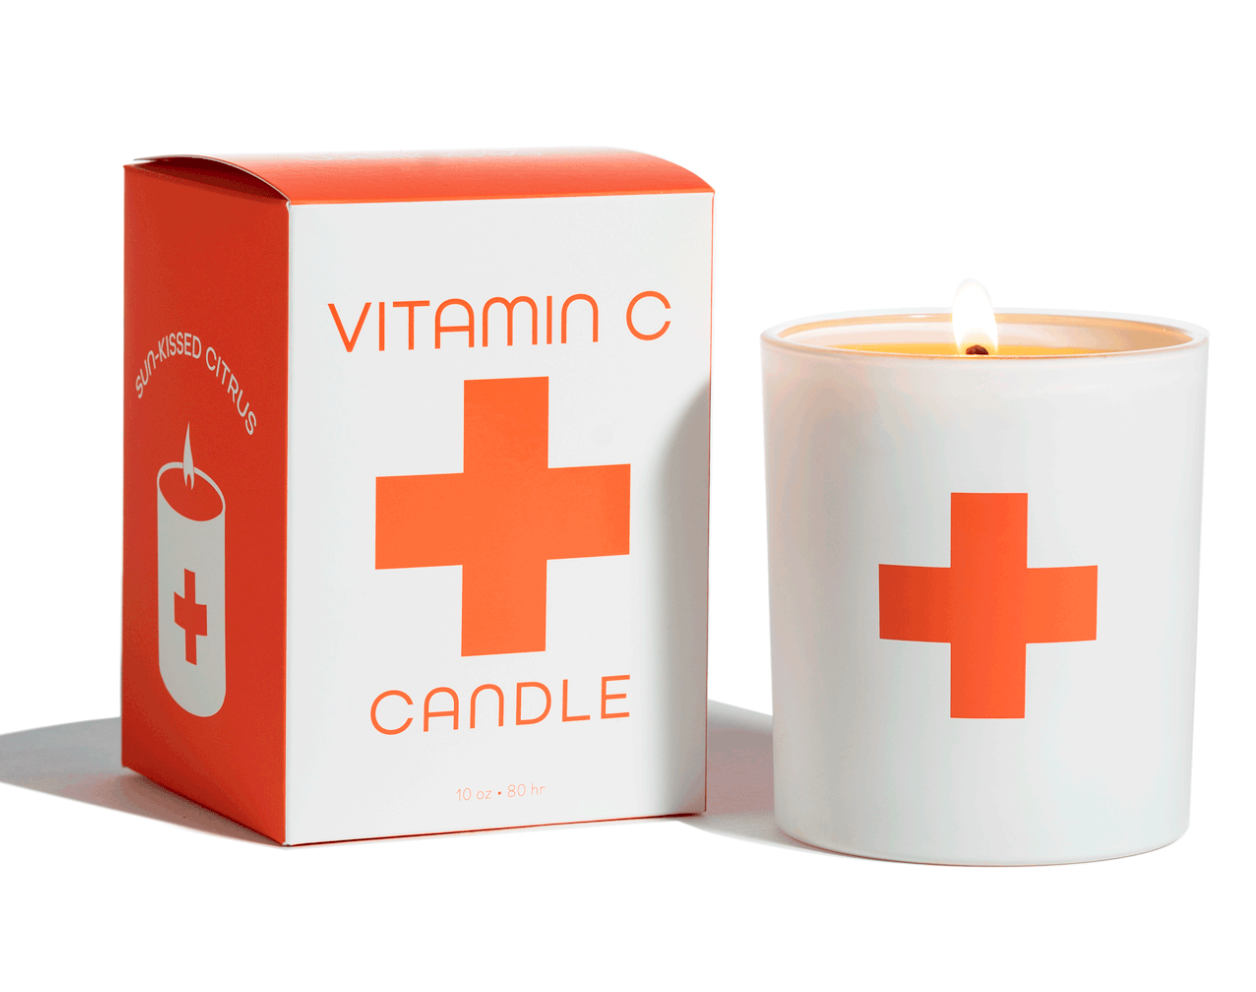 Vitamin C Candle